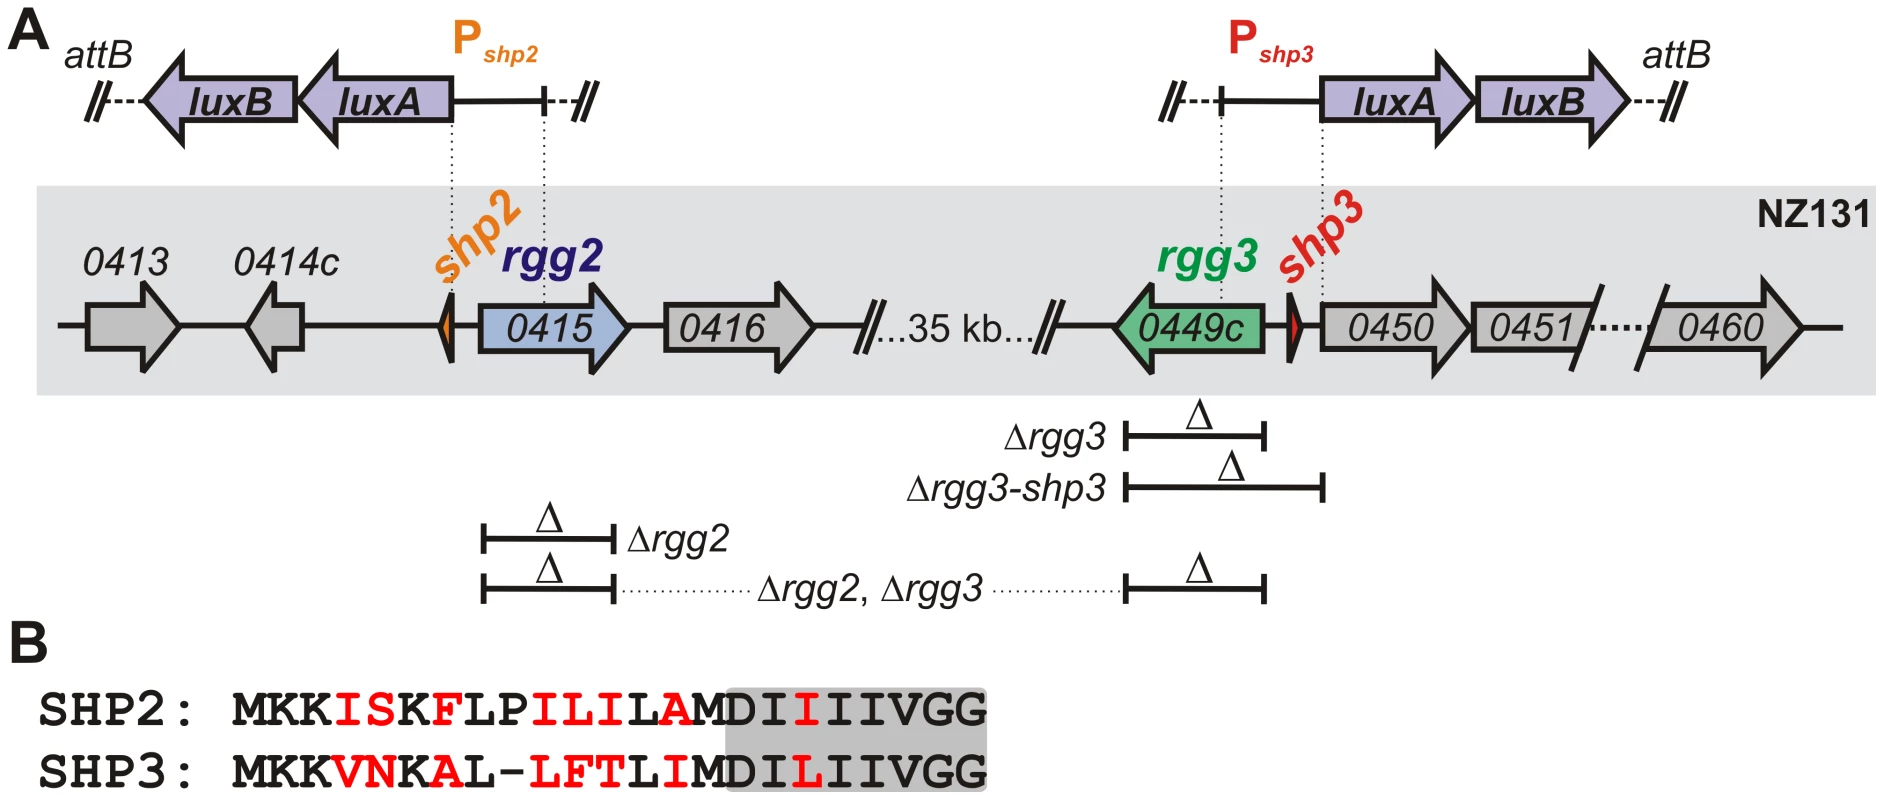 Rgg regulators in the <i>S. pyogenes</i> NZ131 genome.